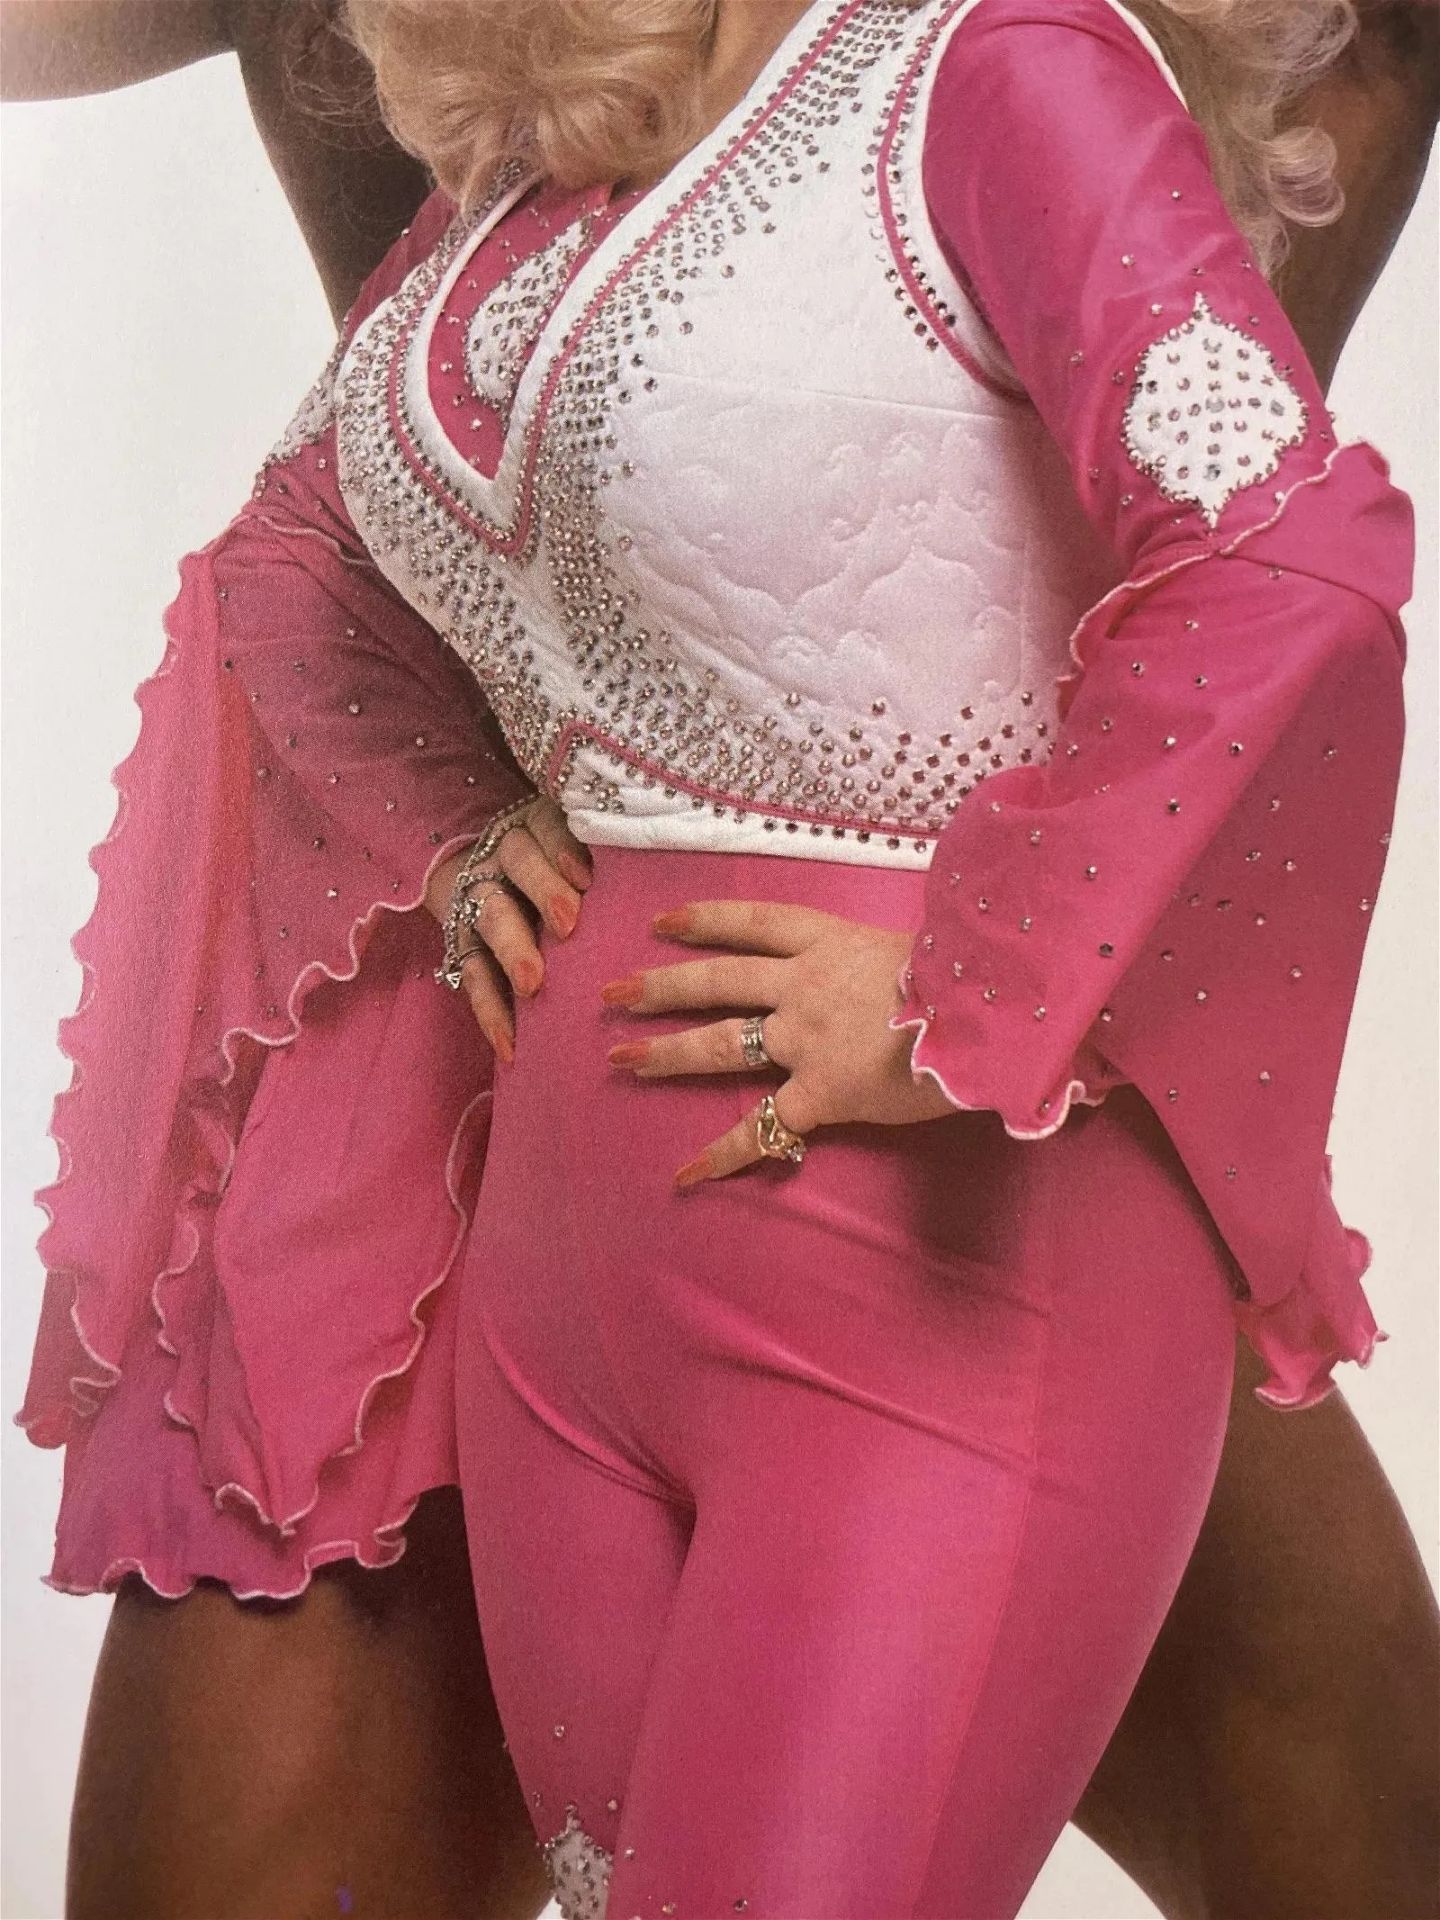 Annie Liebovitz "Dolly Parton, Arnold Schwarzenegger, New York City, 1977" Print.
 - Image 3 of 5